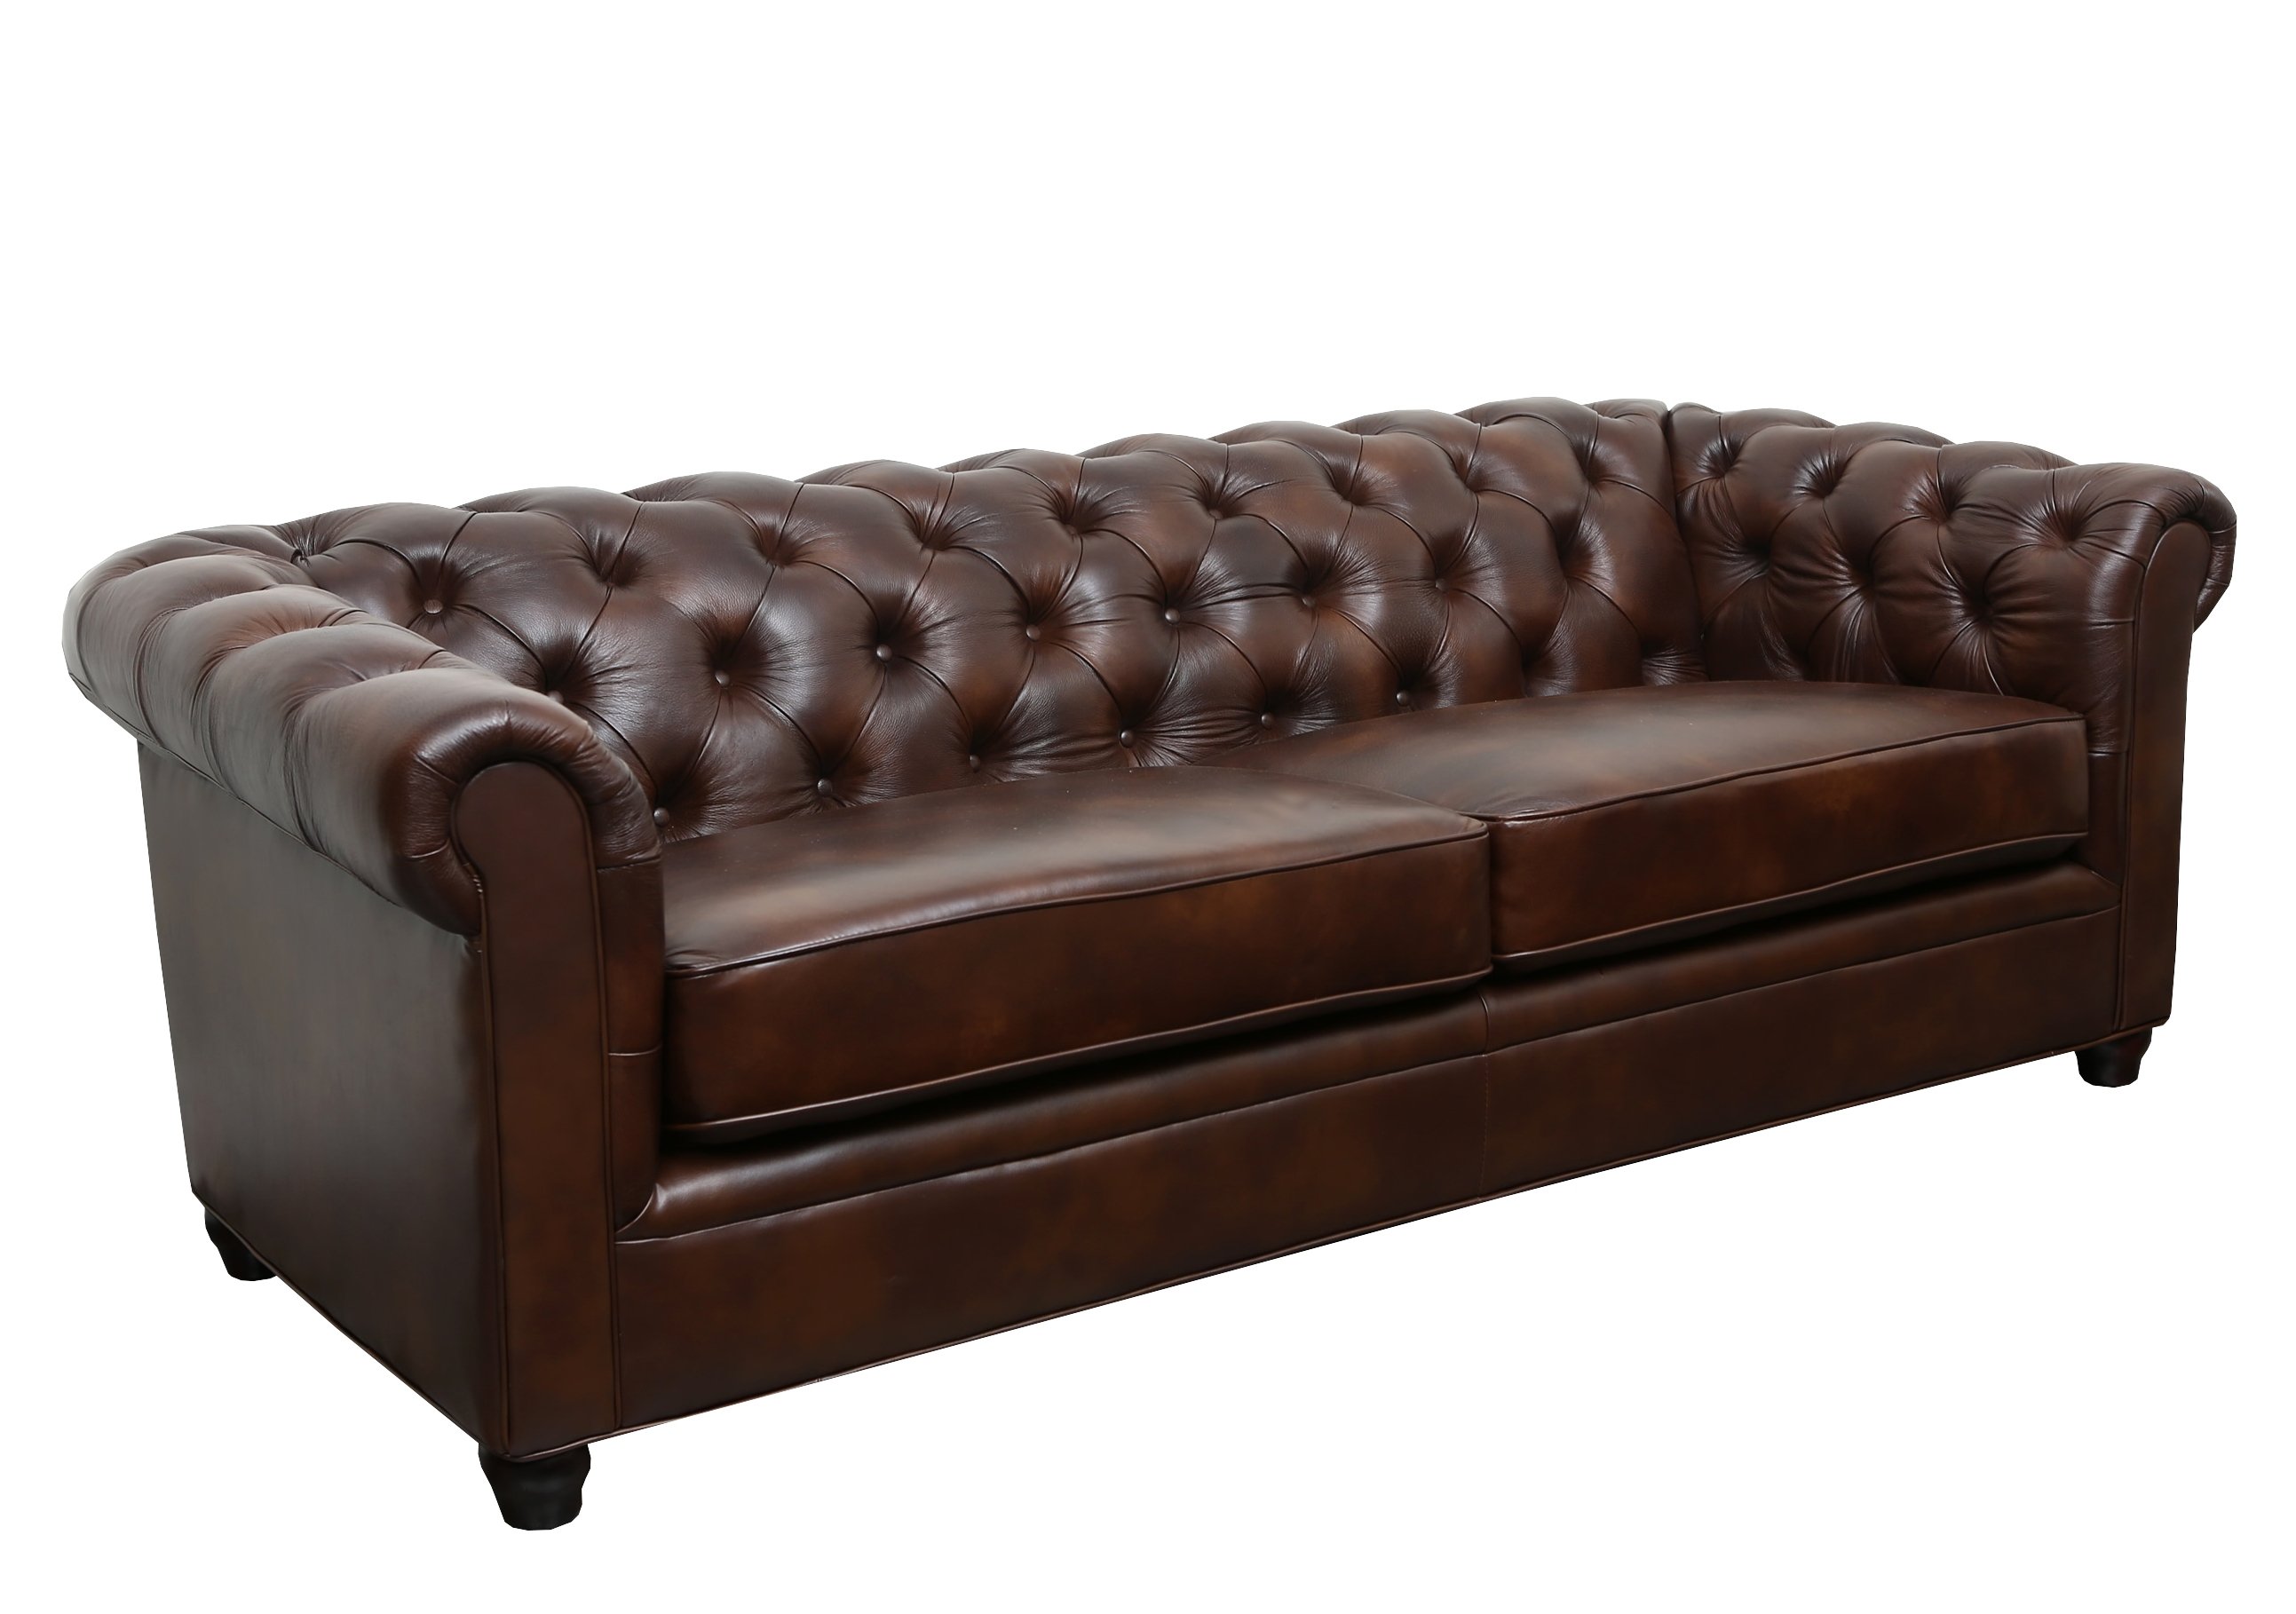 sofa chesterfield trent austin design harlem leather chesterfield sofa u0026 reviews | wayfair DQQDAWN